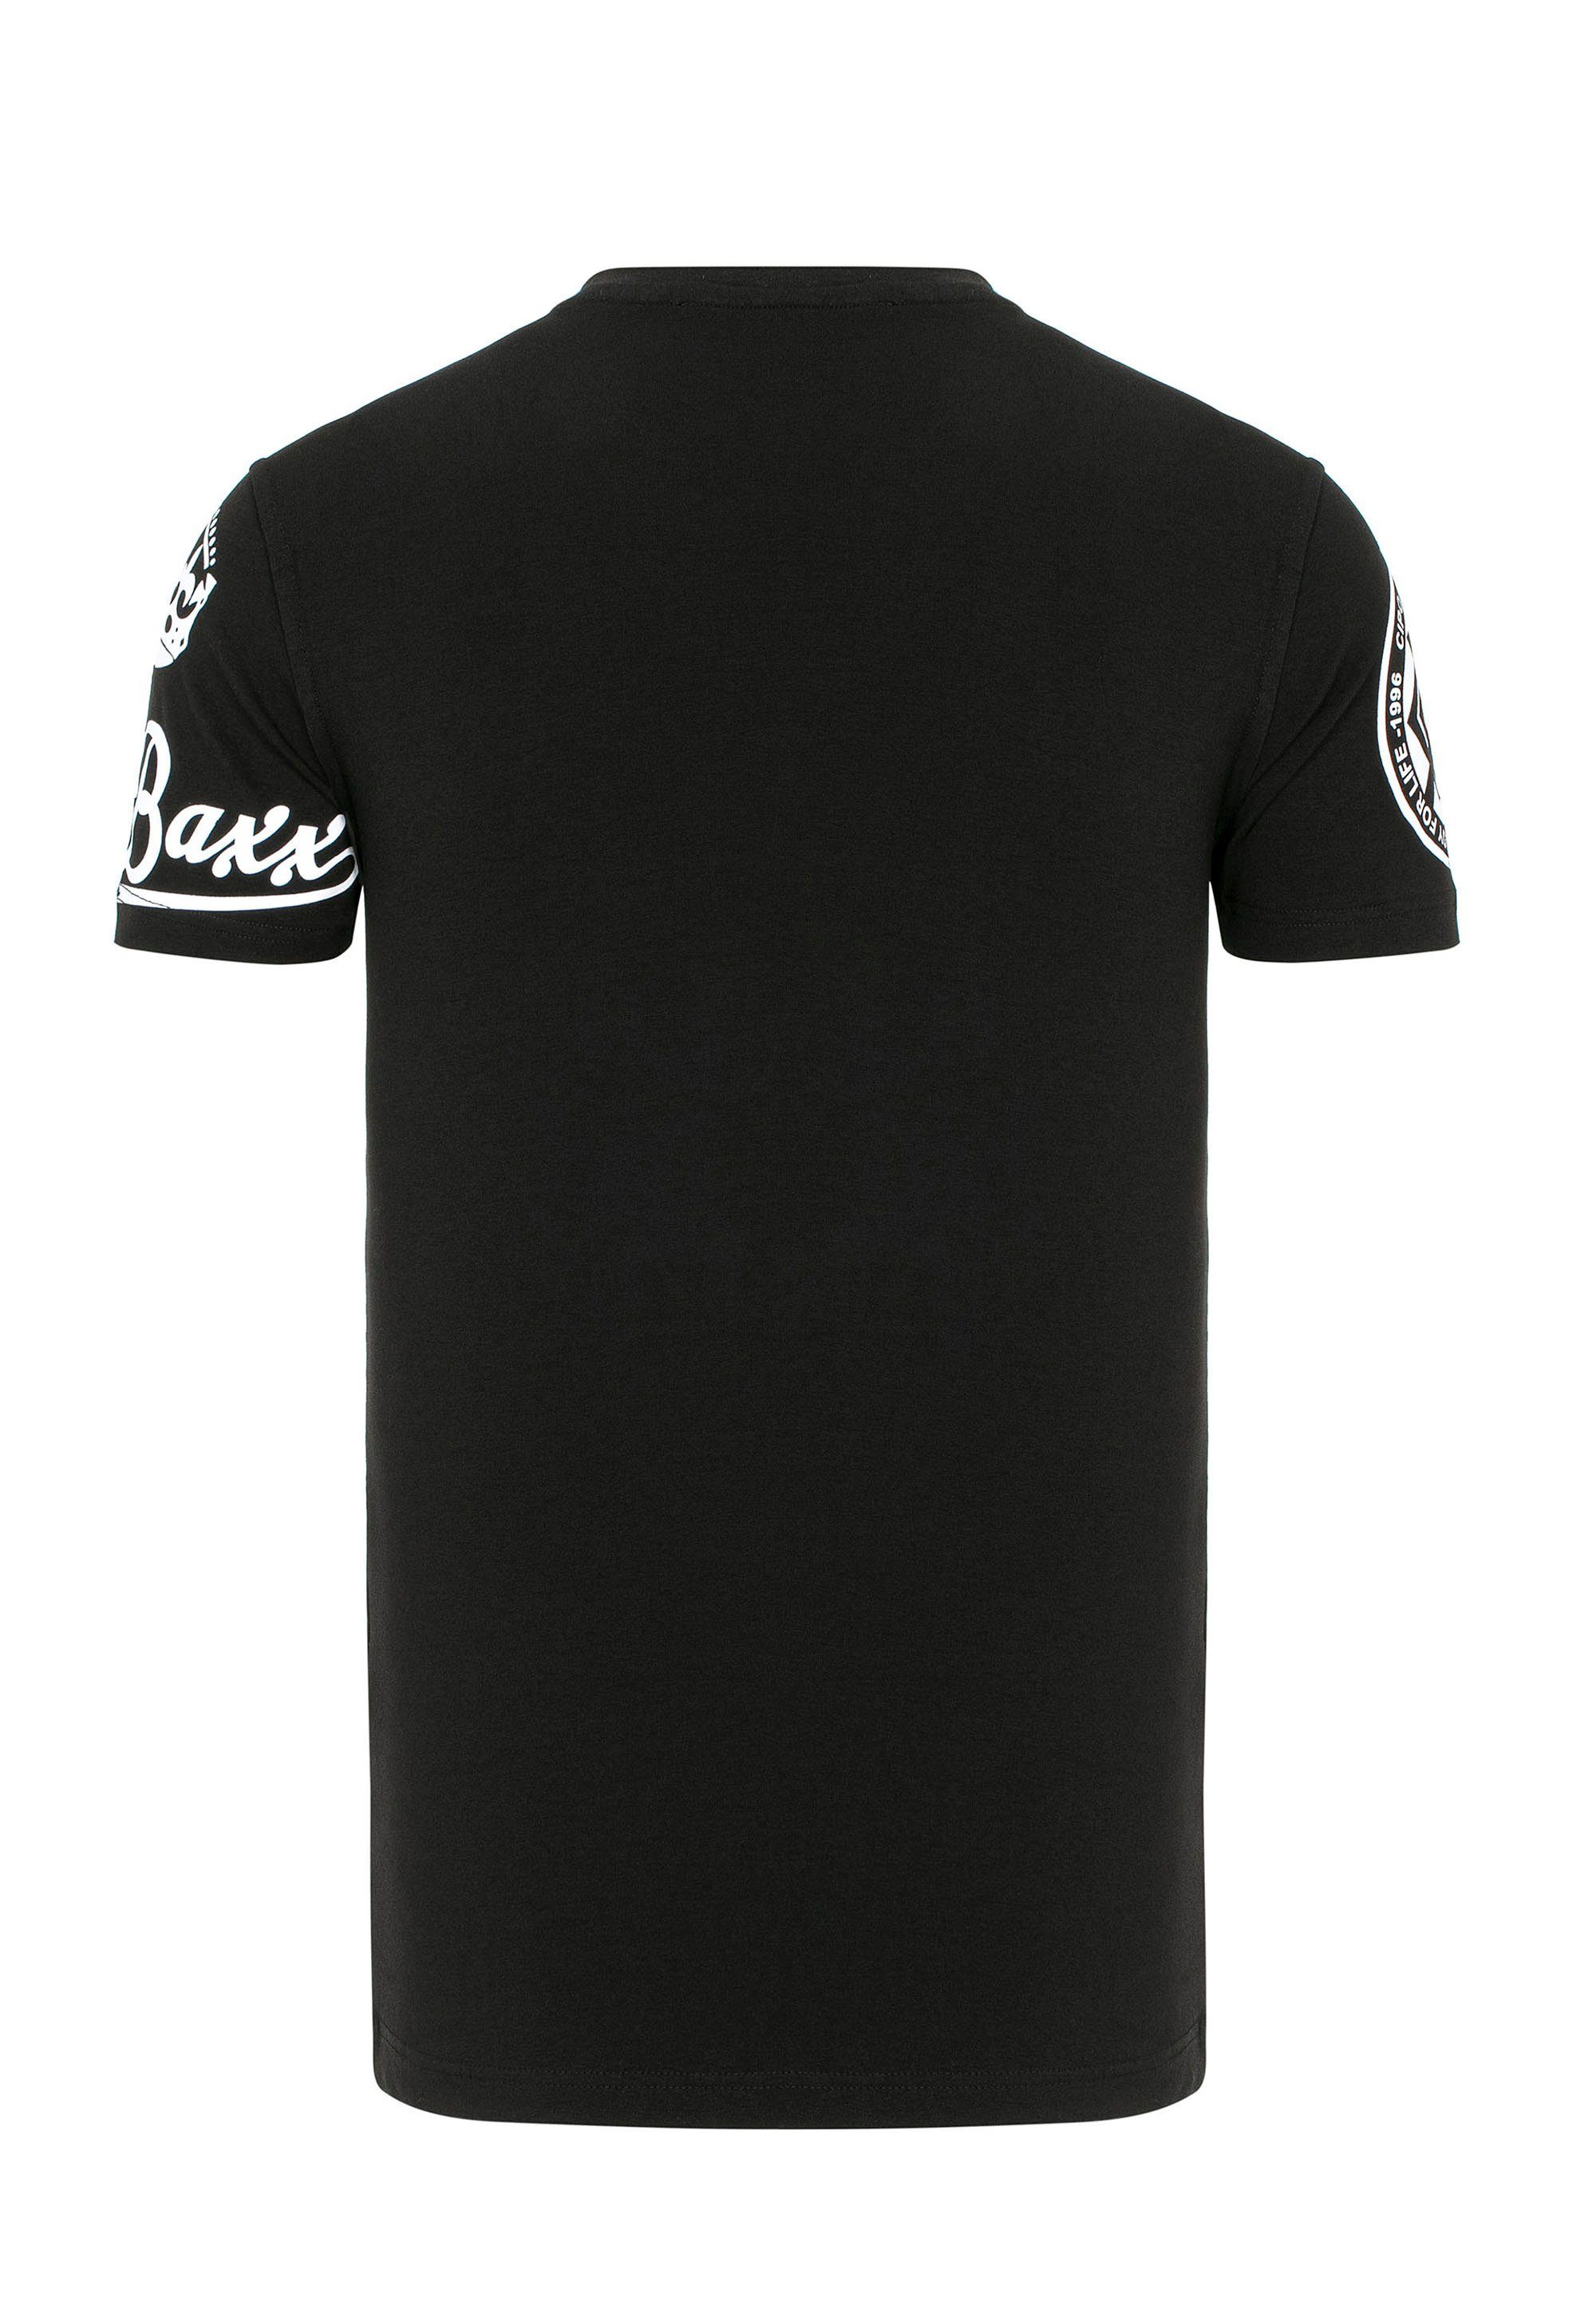 Cipo & Baxx T-Shirt trendigem schwarz mit Frontprint